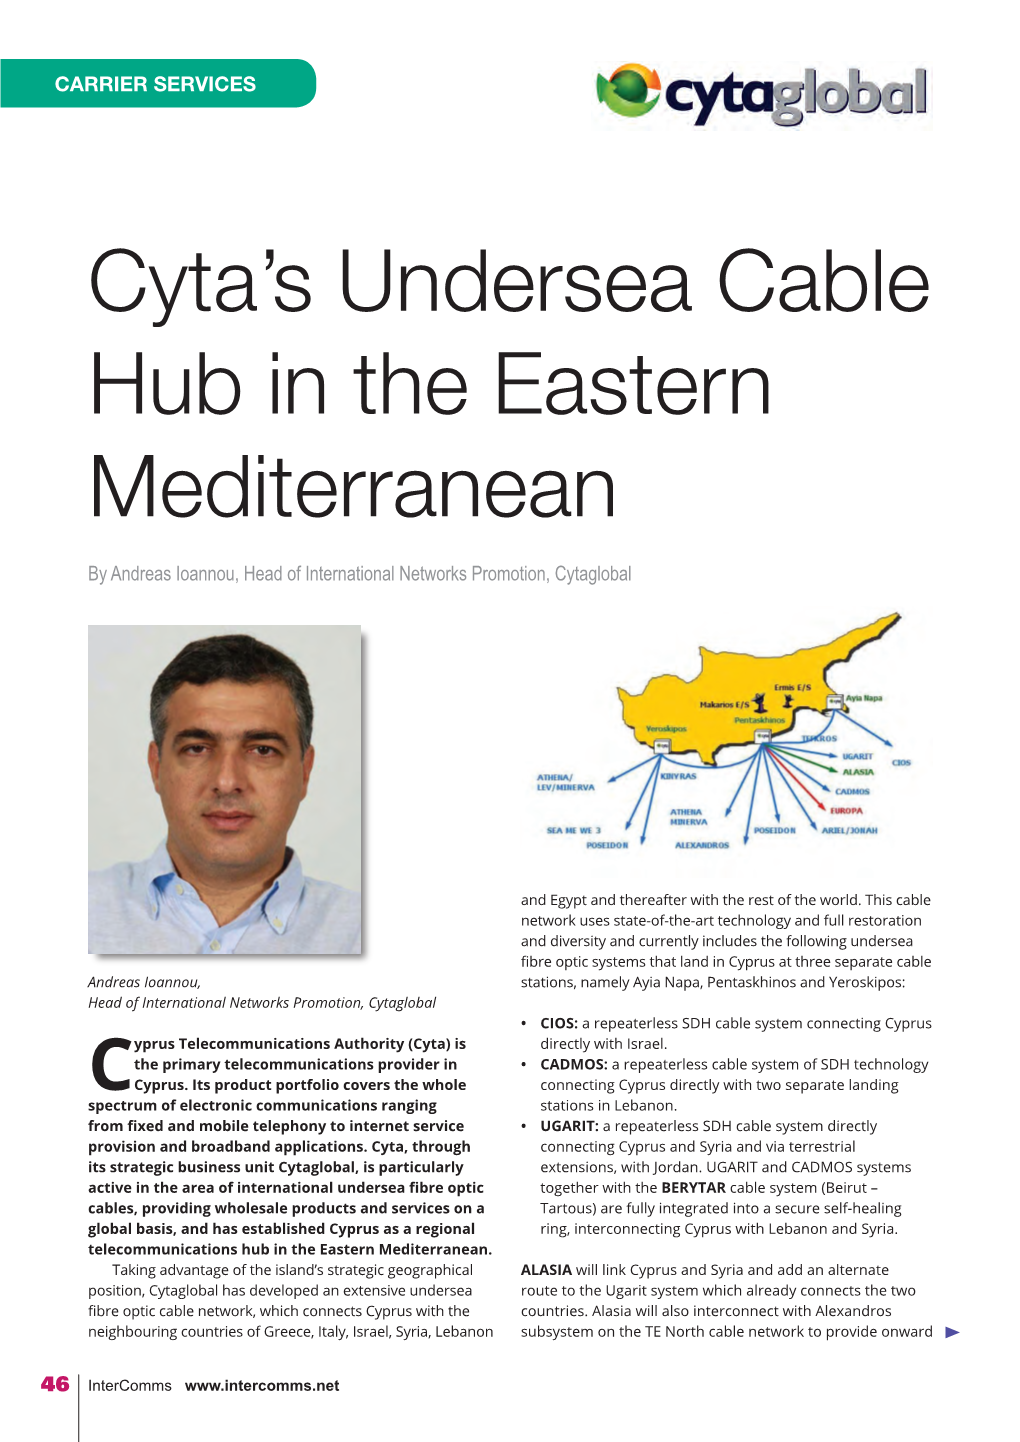 Cyta's Undersea Cable Hub in the Eastern Mediterranean